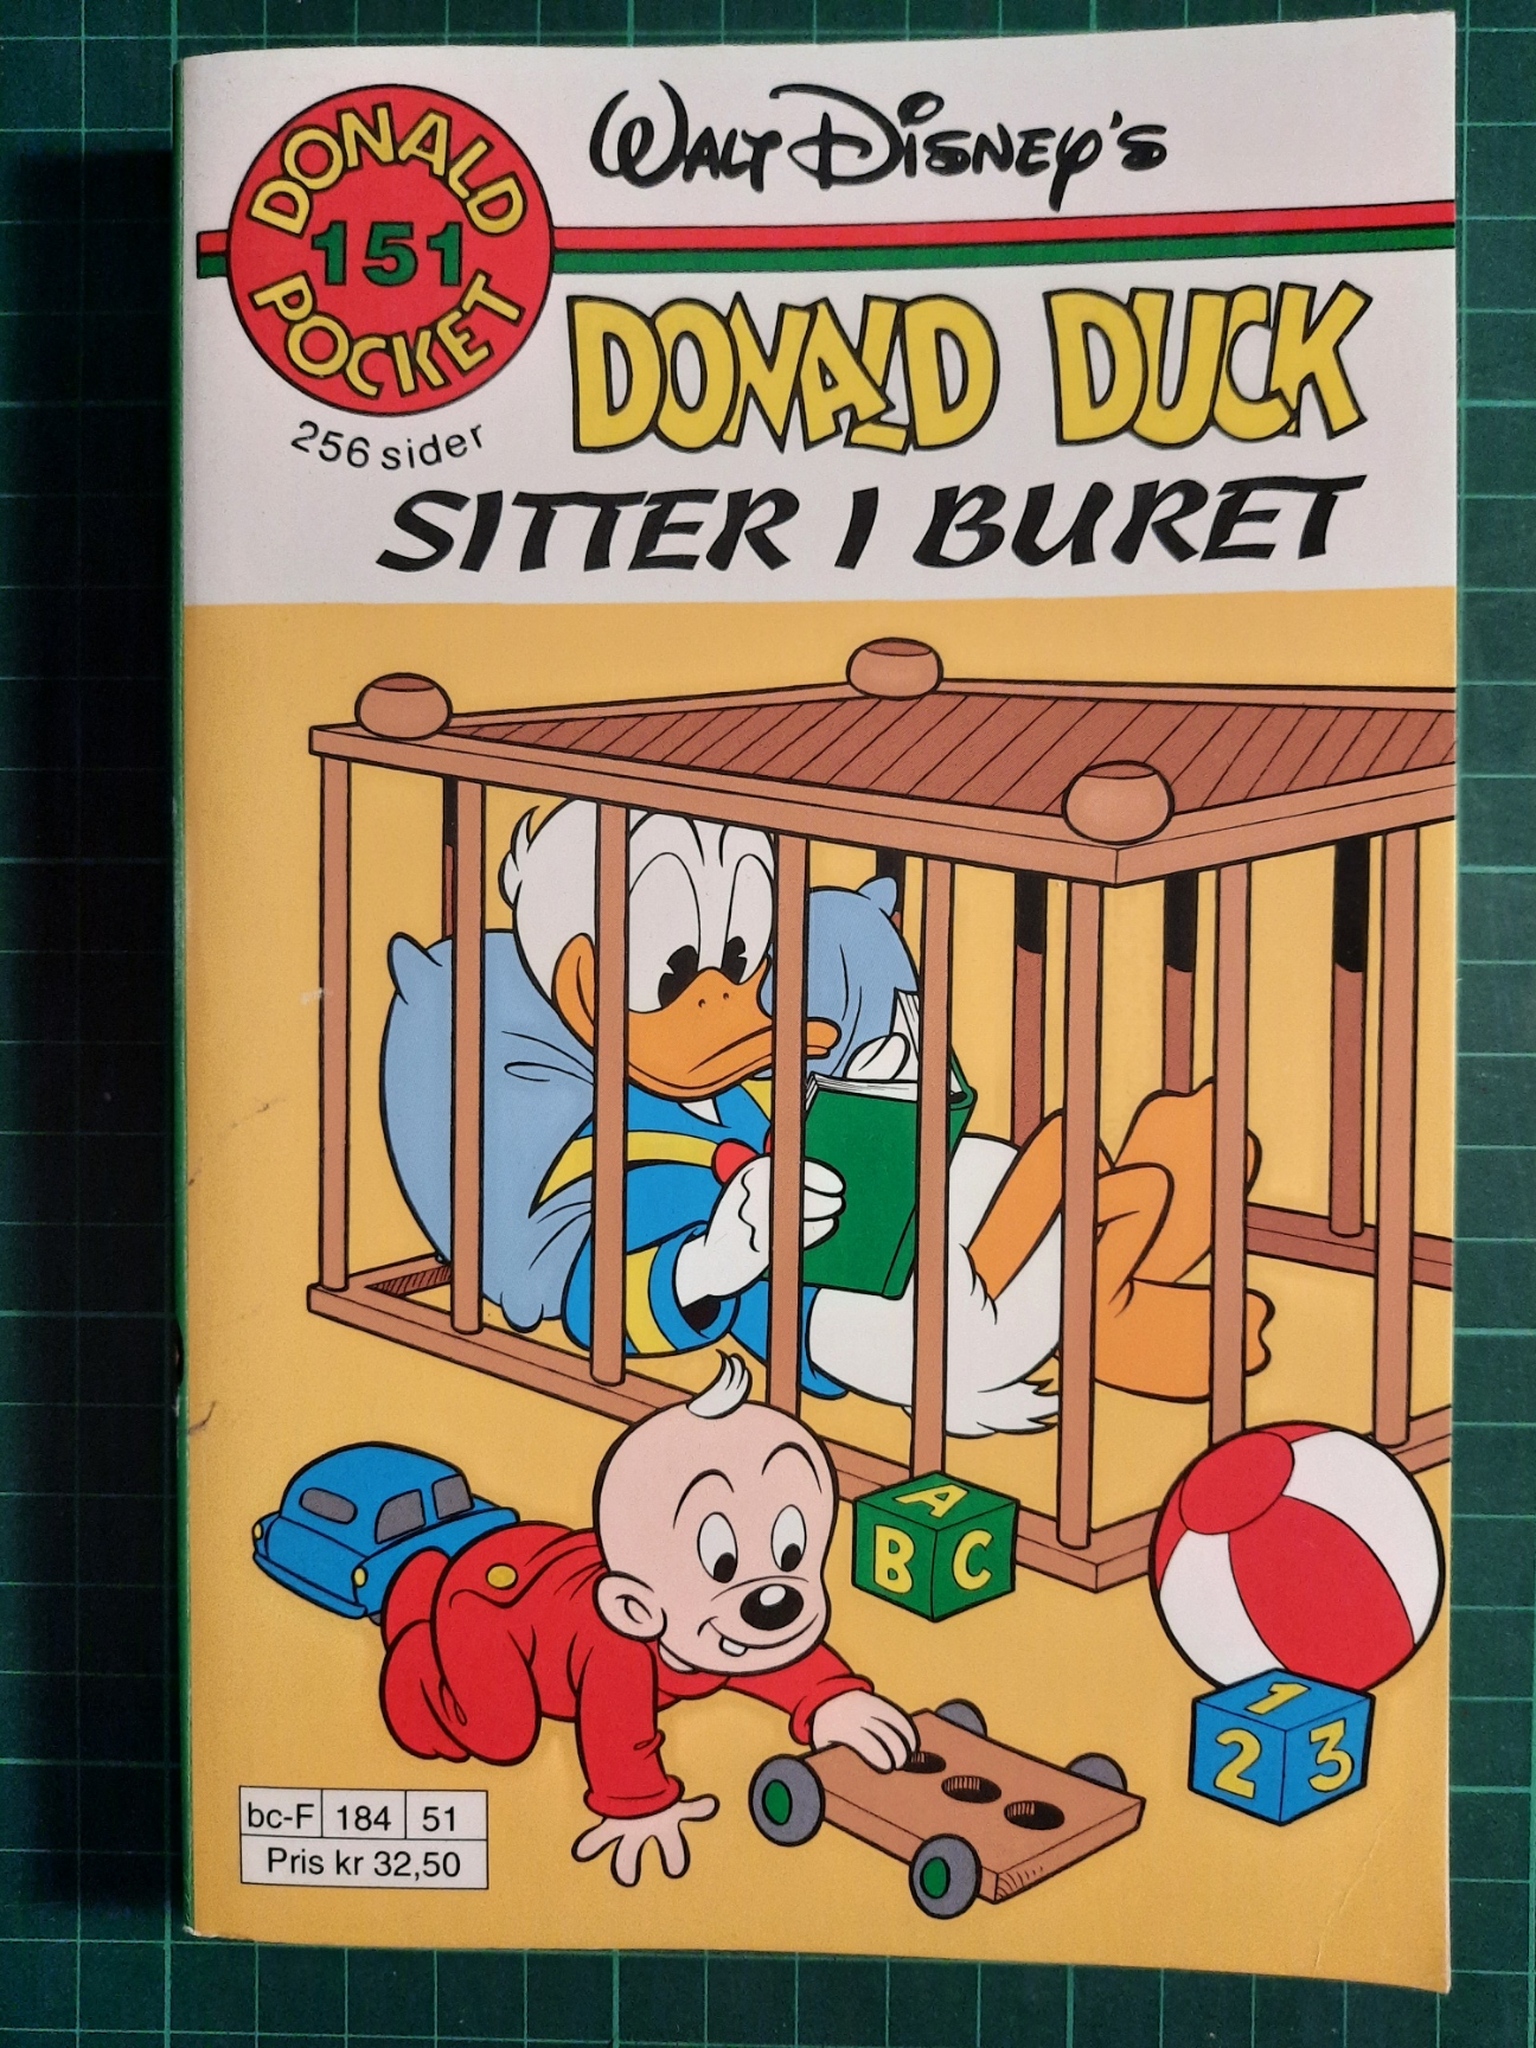 Donald Pocket 151